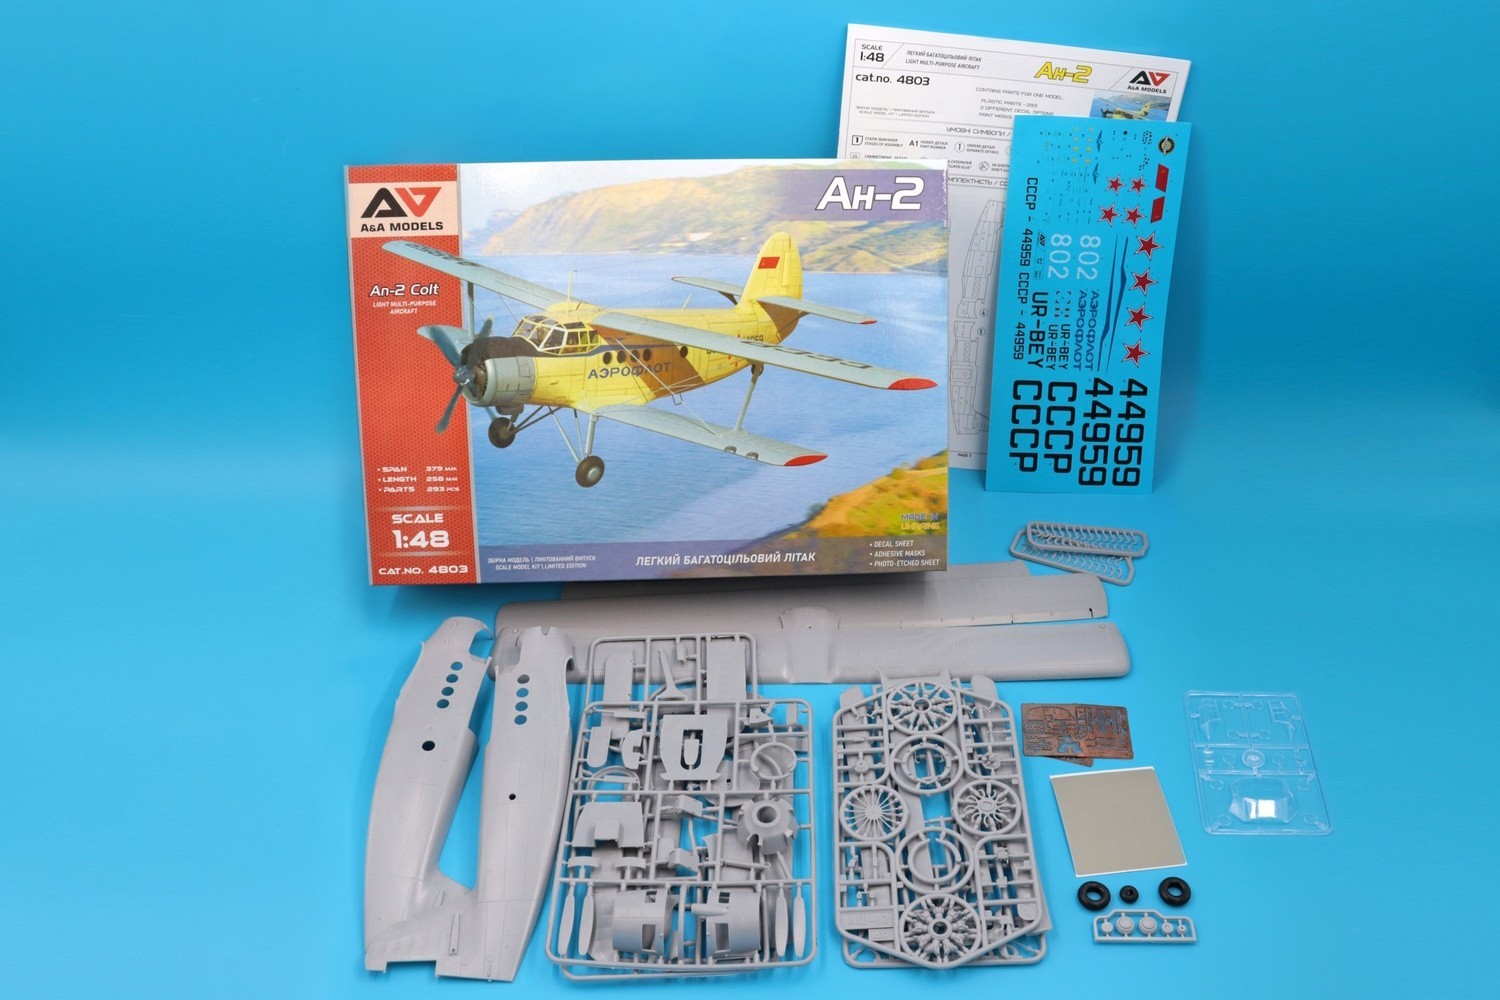 A&A Models 4803, An-2, Colt , light multi-purpose aircraft, 1/48, scale, model